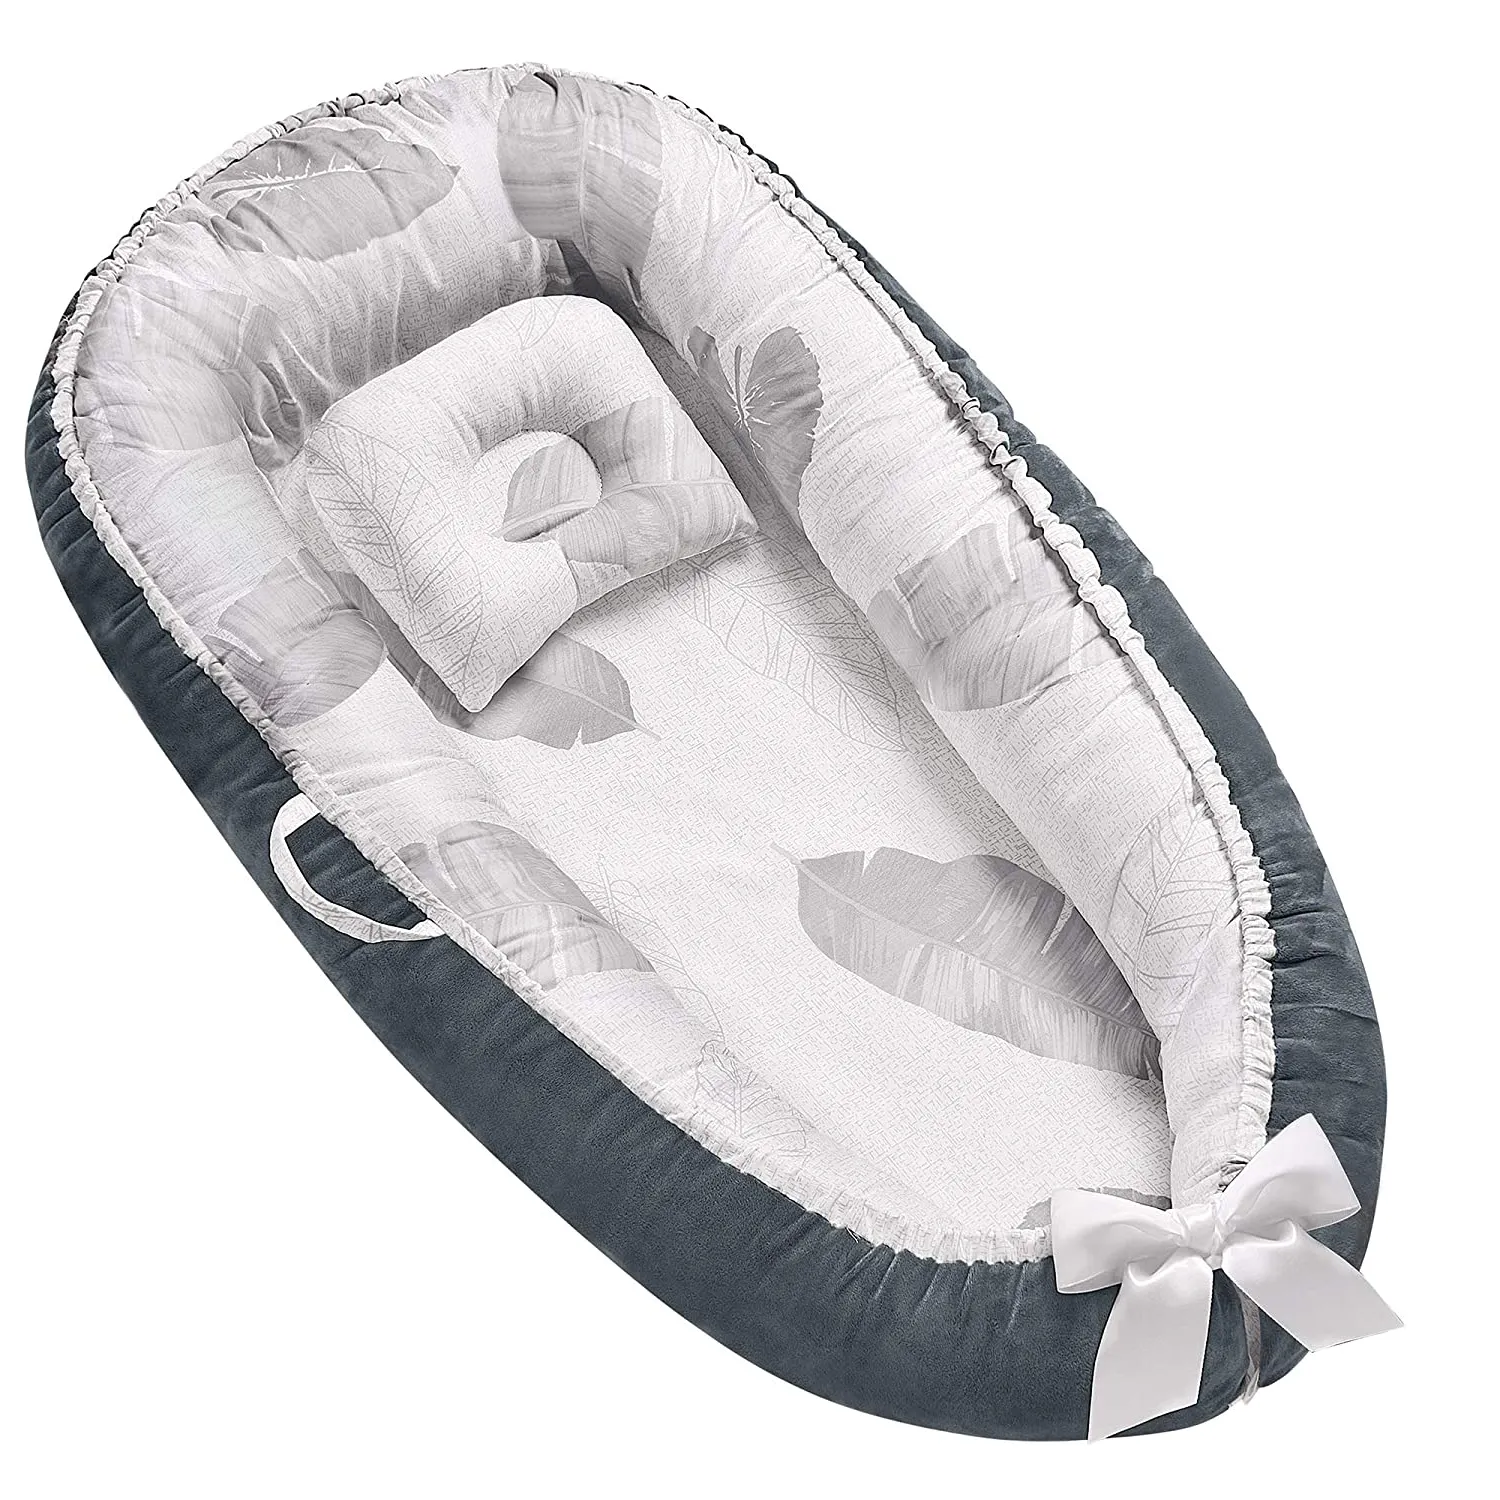 CPC ASTM CPISA 인증 슈퍼 소프트 코튼 패딩 아기 안락, 접이식 아기 침대 충전, 휴대용 아기 둥지 침대